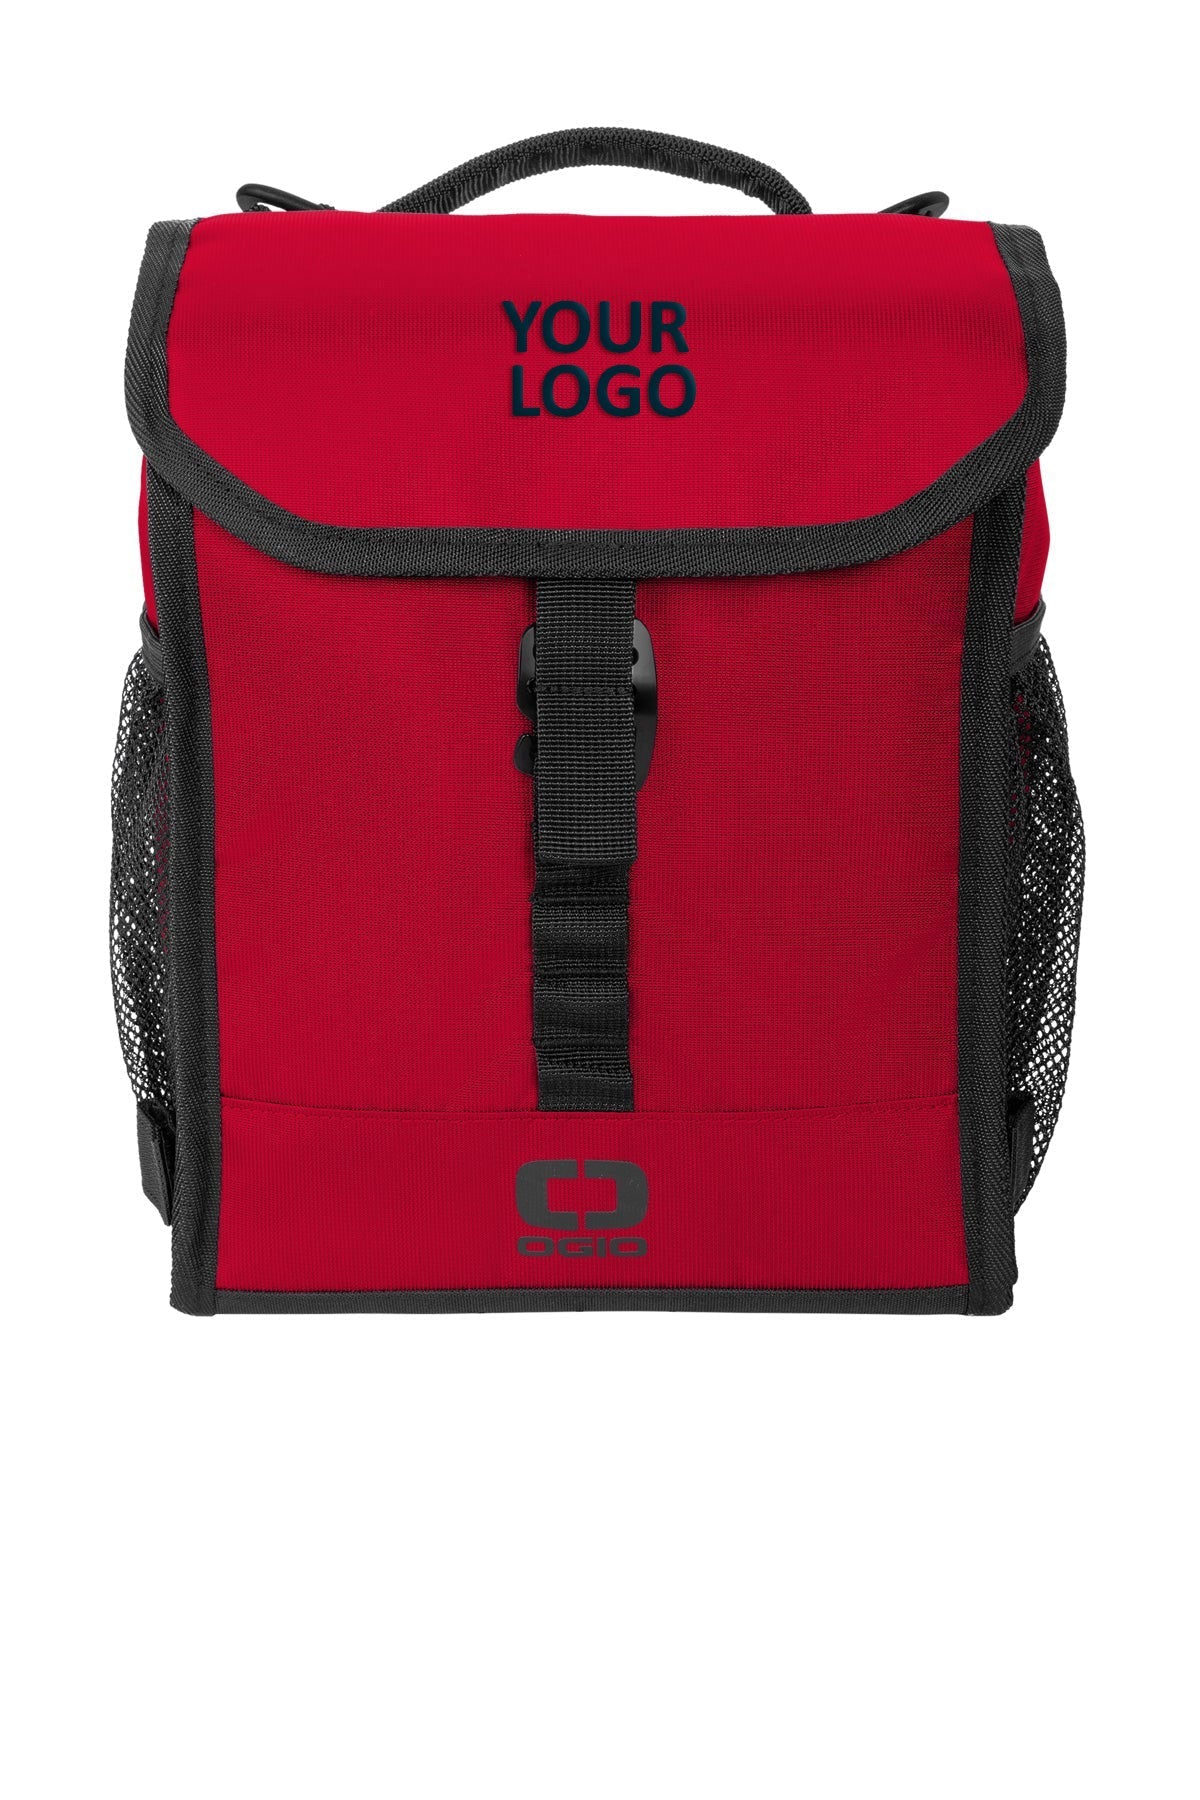 OGIO Signal Red 96000 custom logo sweatshirts